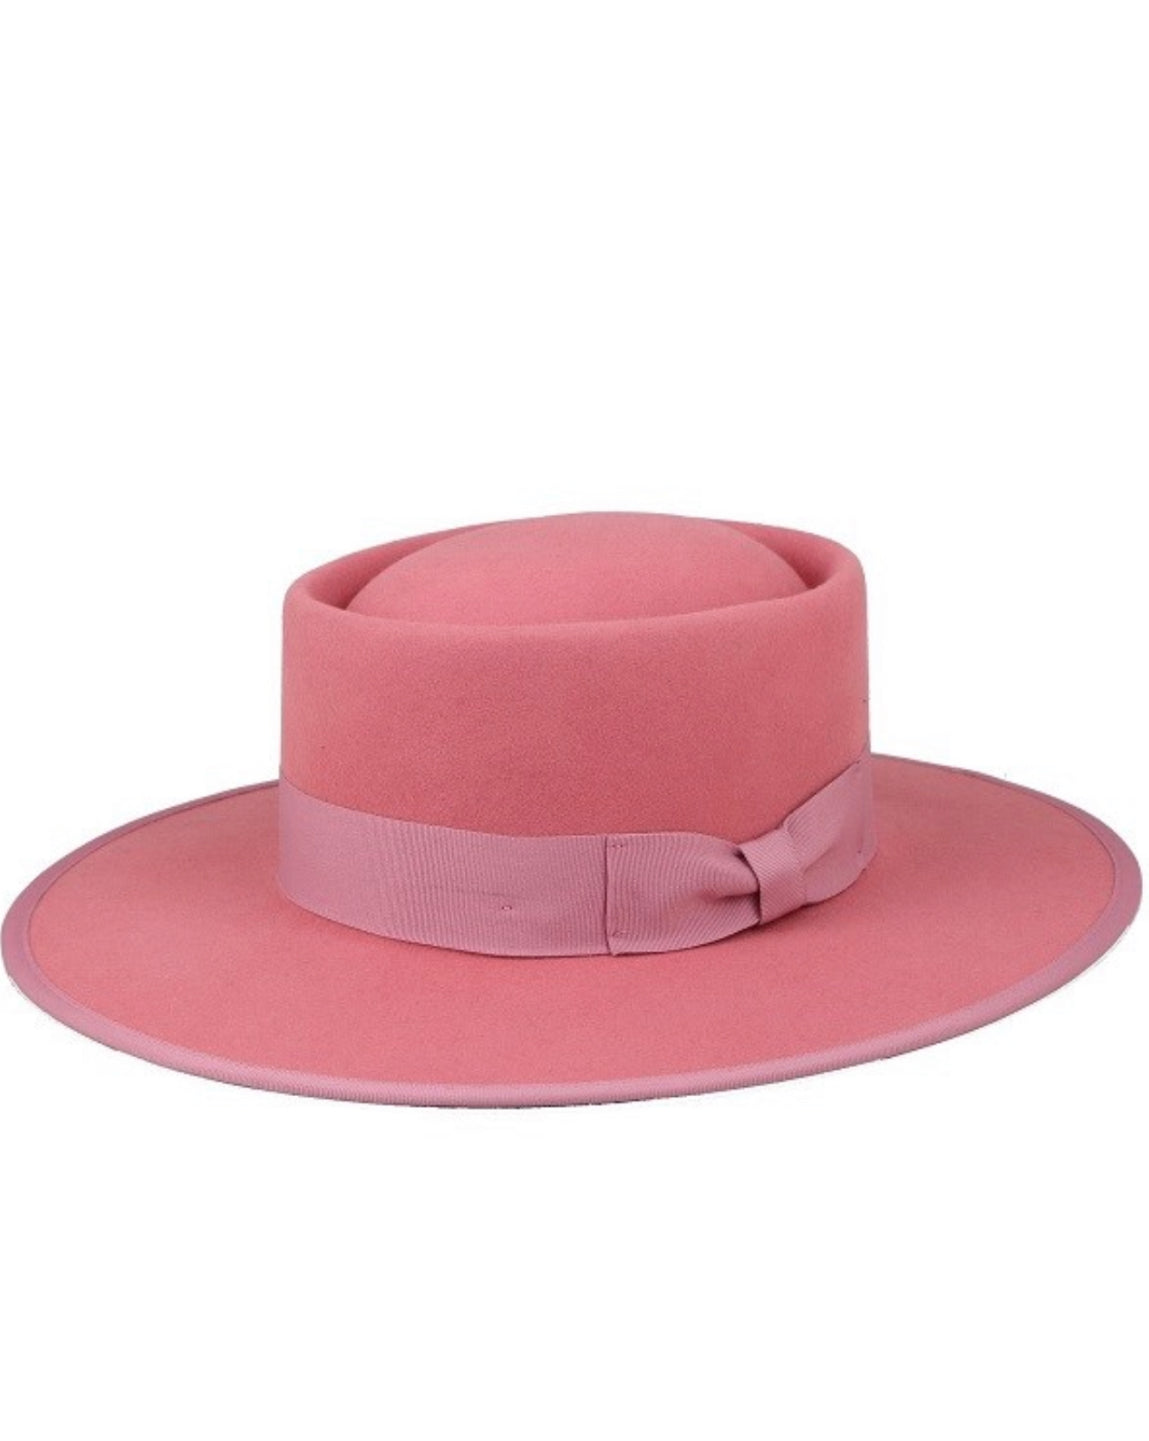 Elegant kayo boater hat in blush pink